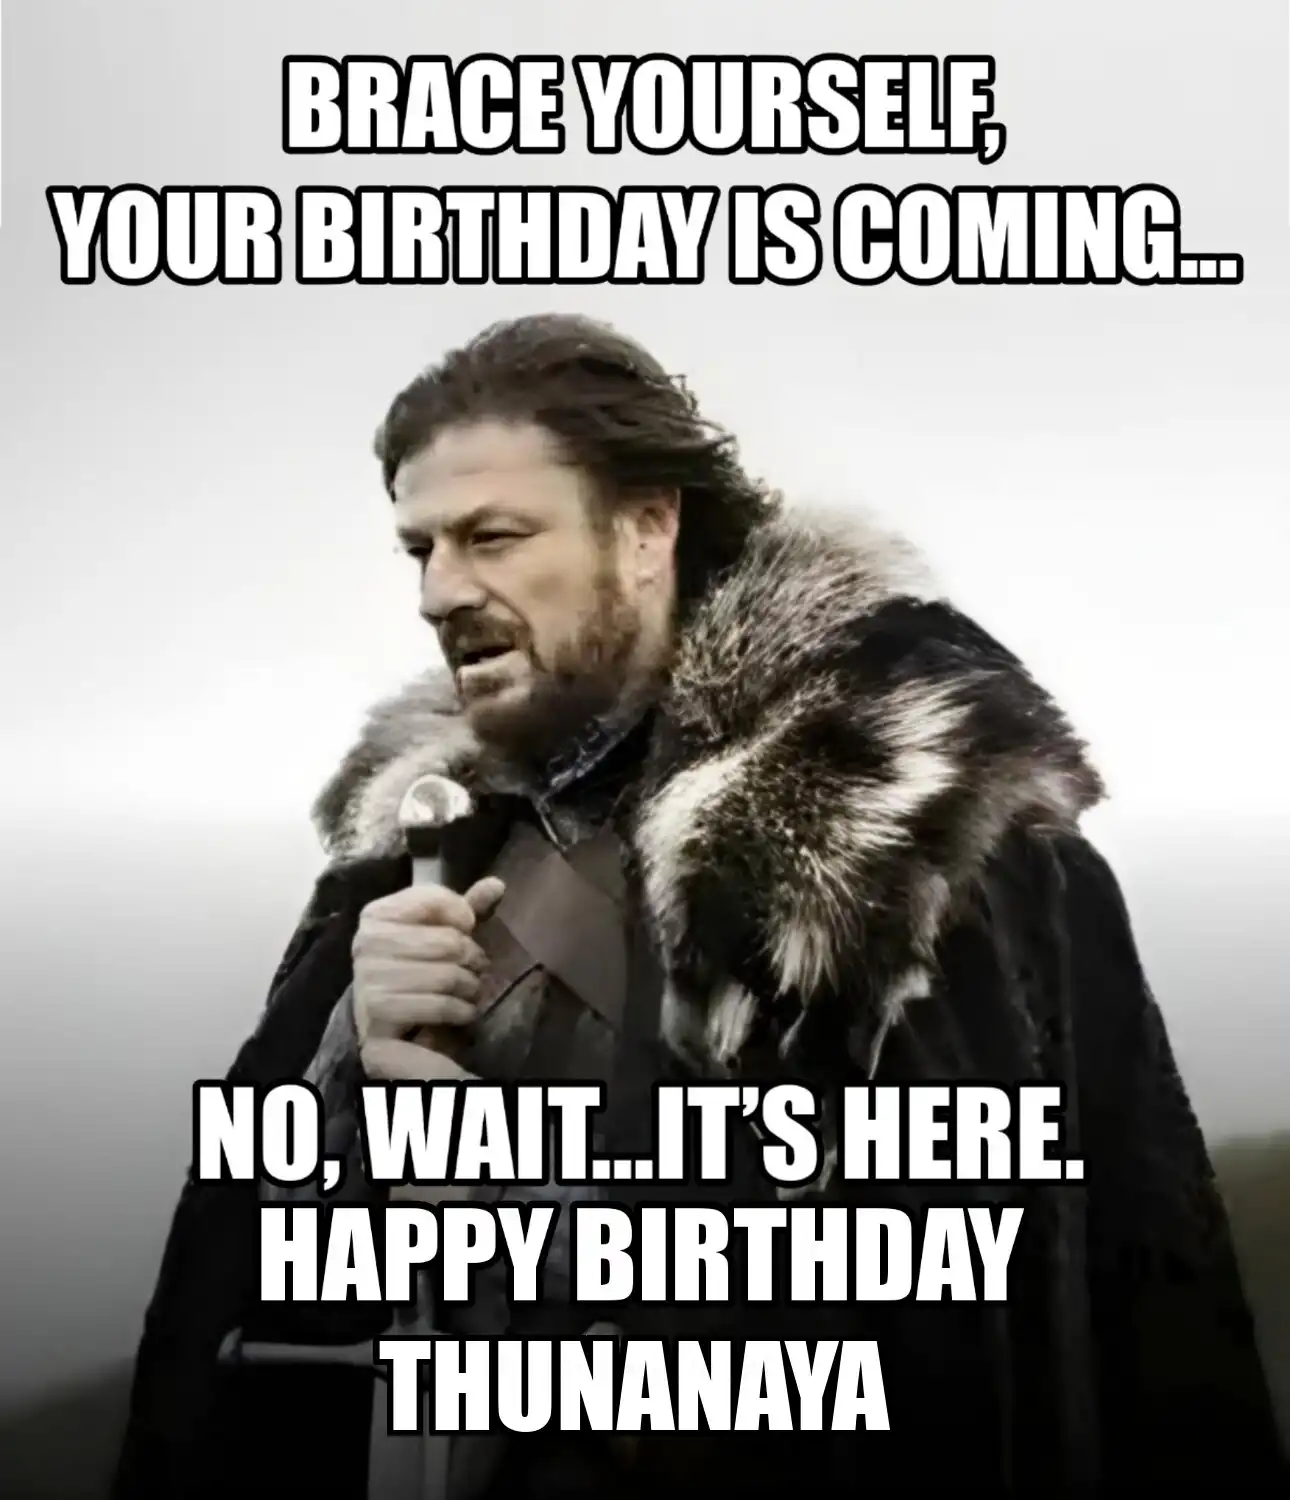 Happy Birthday Thunanaya Brace Yourself Your Birthday Is Coming Meme